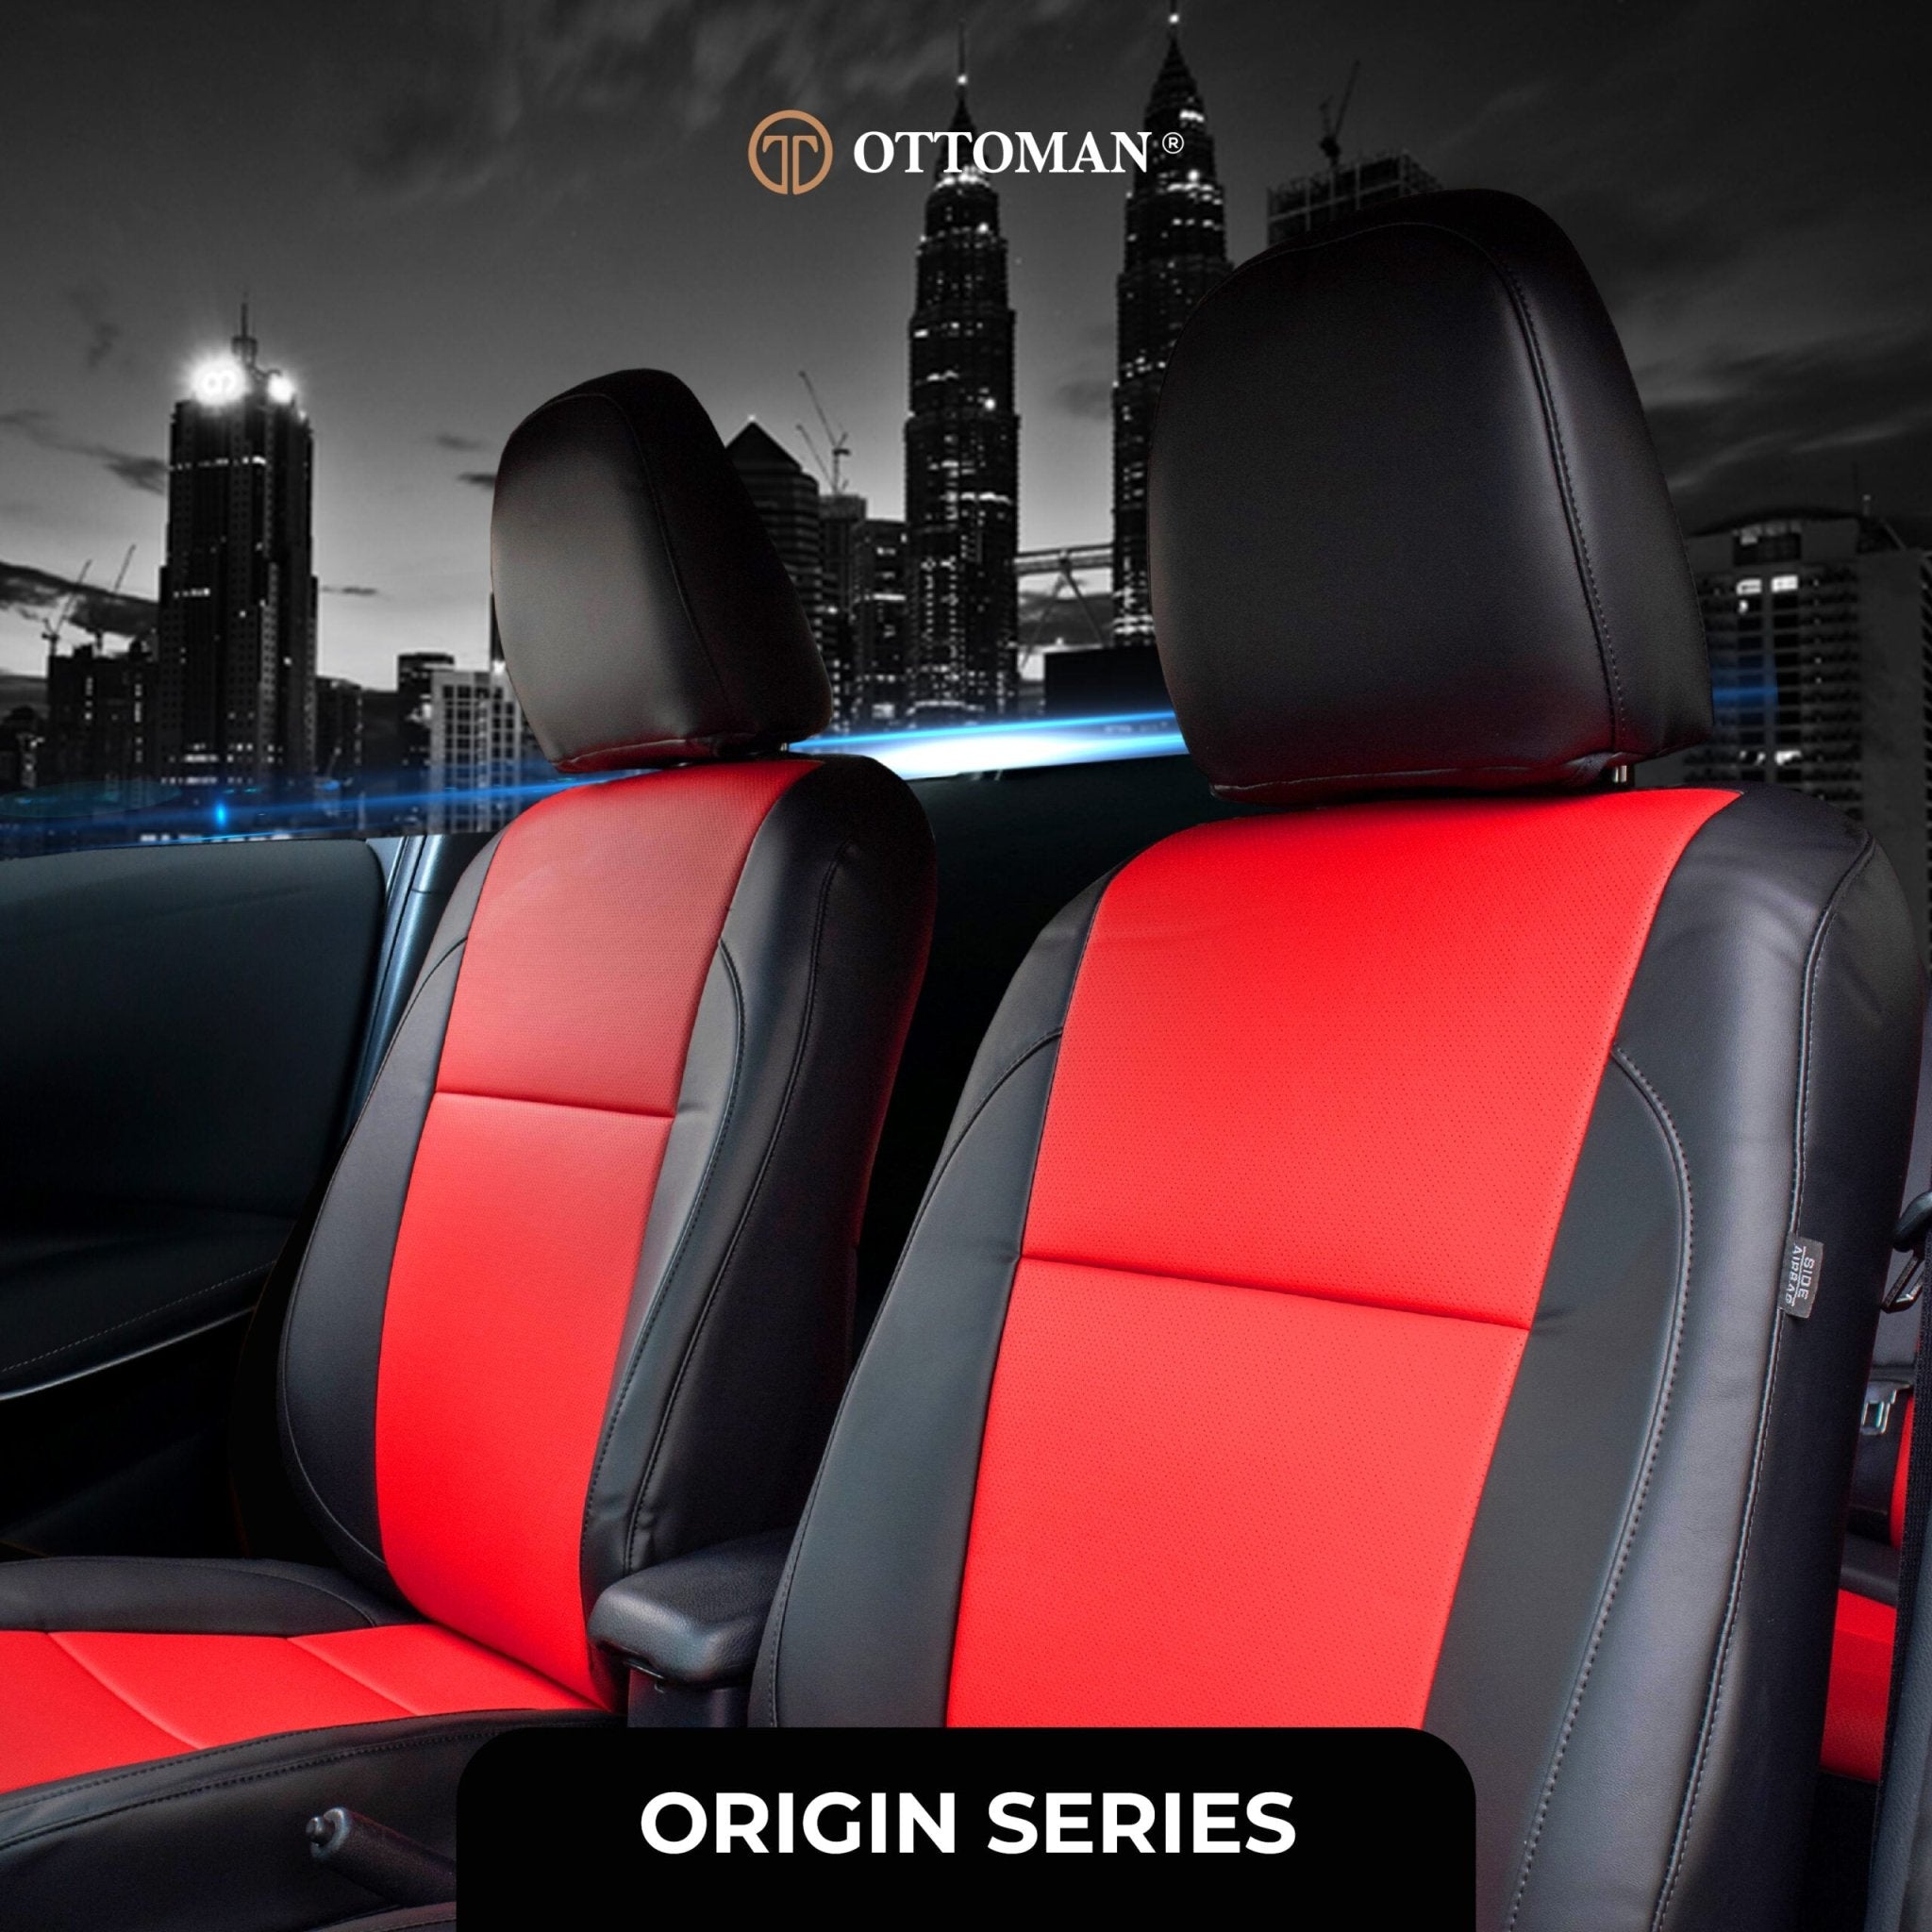 Ford Mondeo (2015-Present) Ottoman Seat Cover Seat Cover in Klang Selangor, Penang, Johor Bahru - Ottoman Car Mats